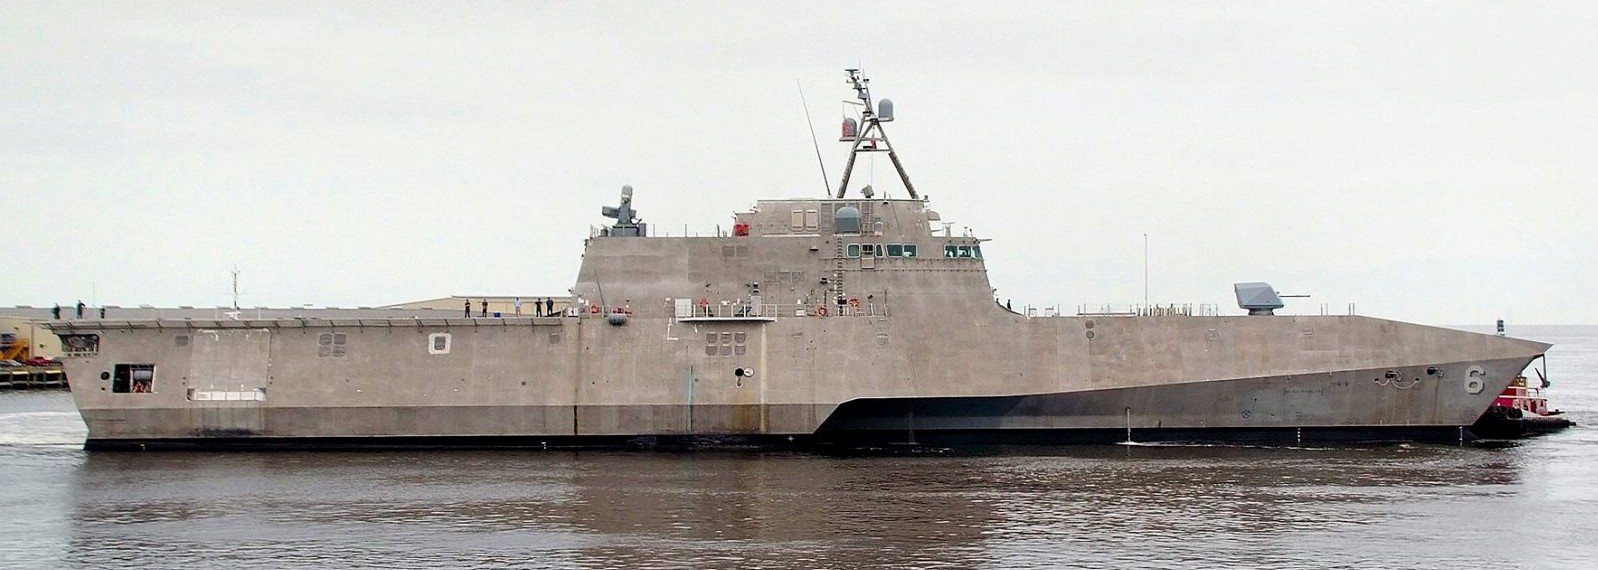 lcs-6 uss jackson independence class littoral combat ship us navy 25